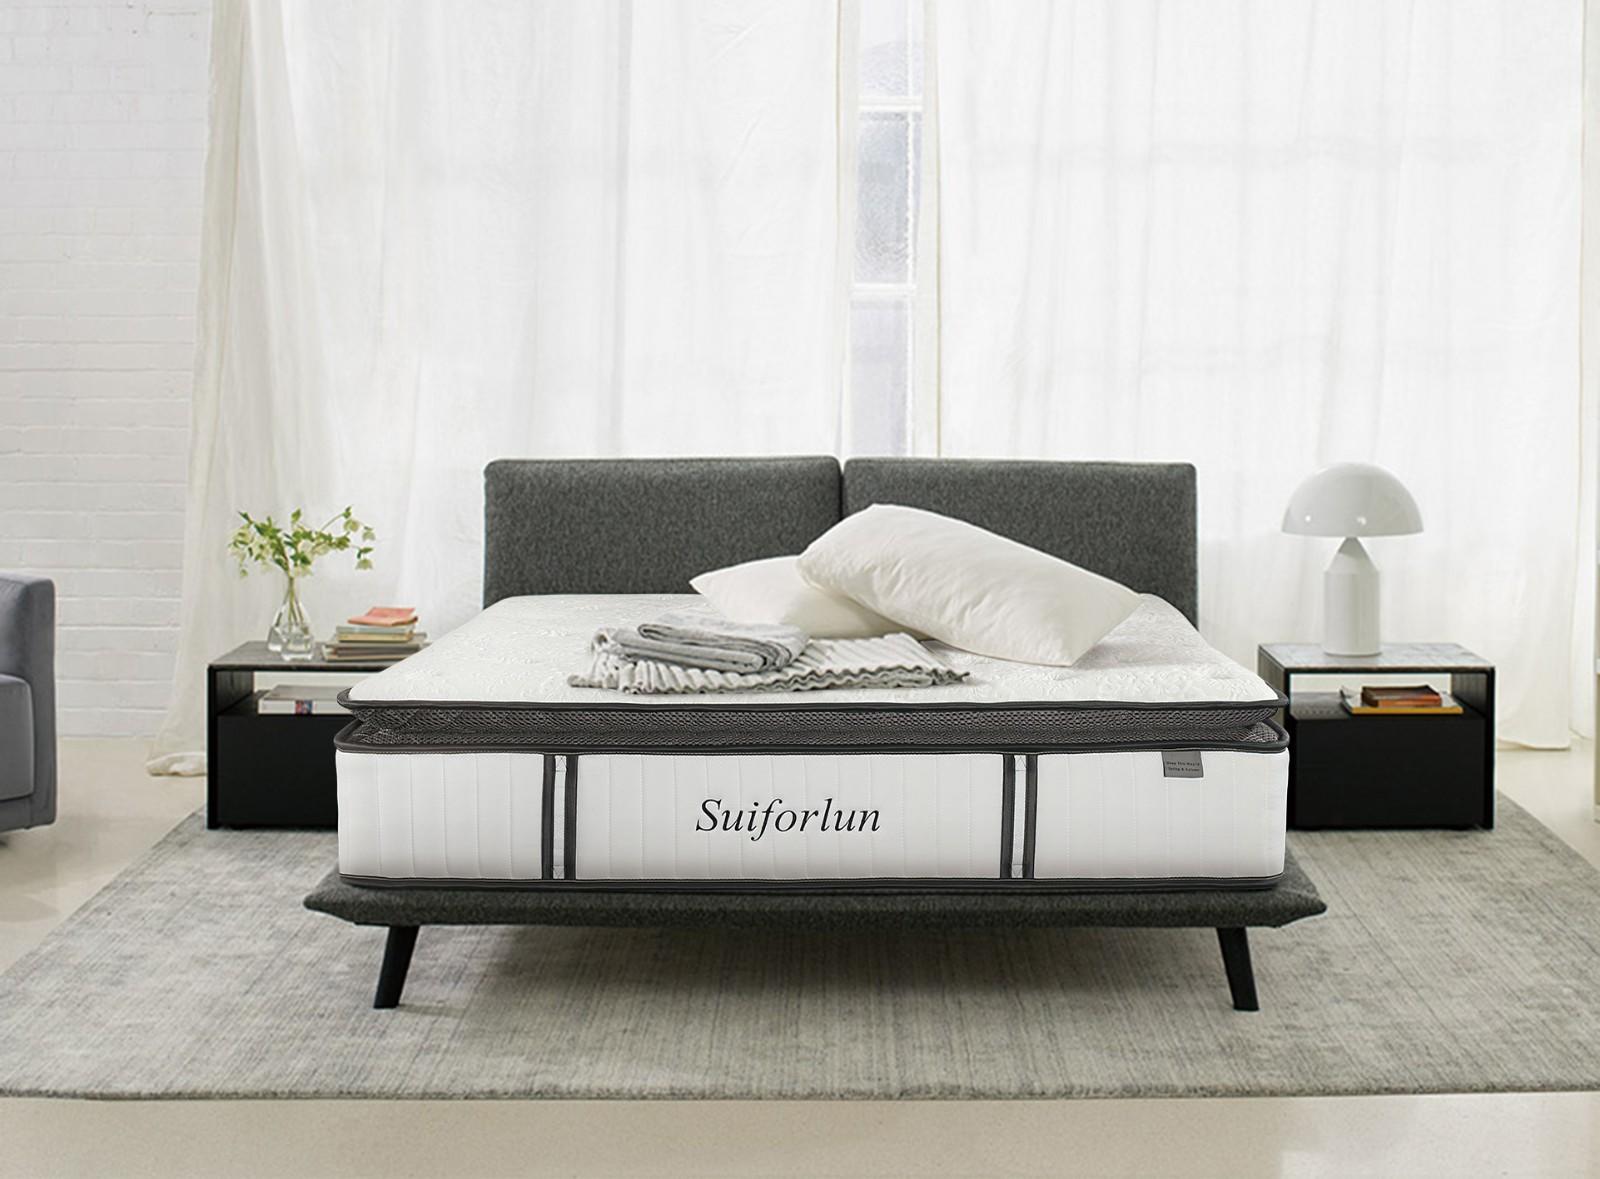 Suiforlun mattress inexpensive latex hybrid mattress-1